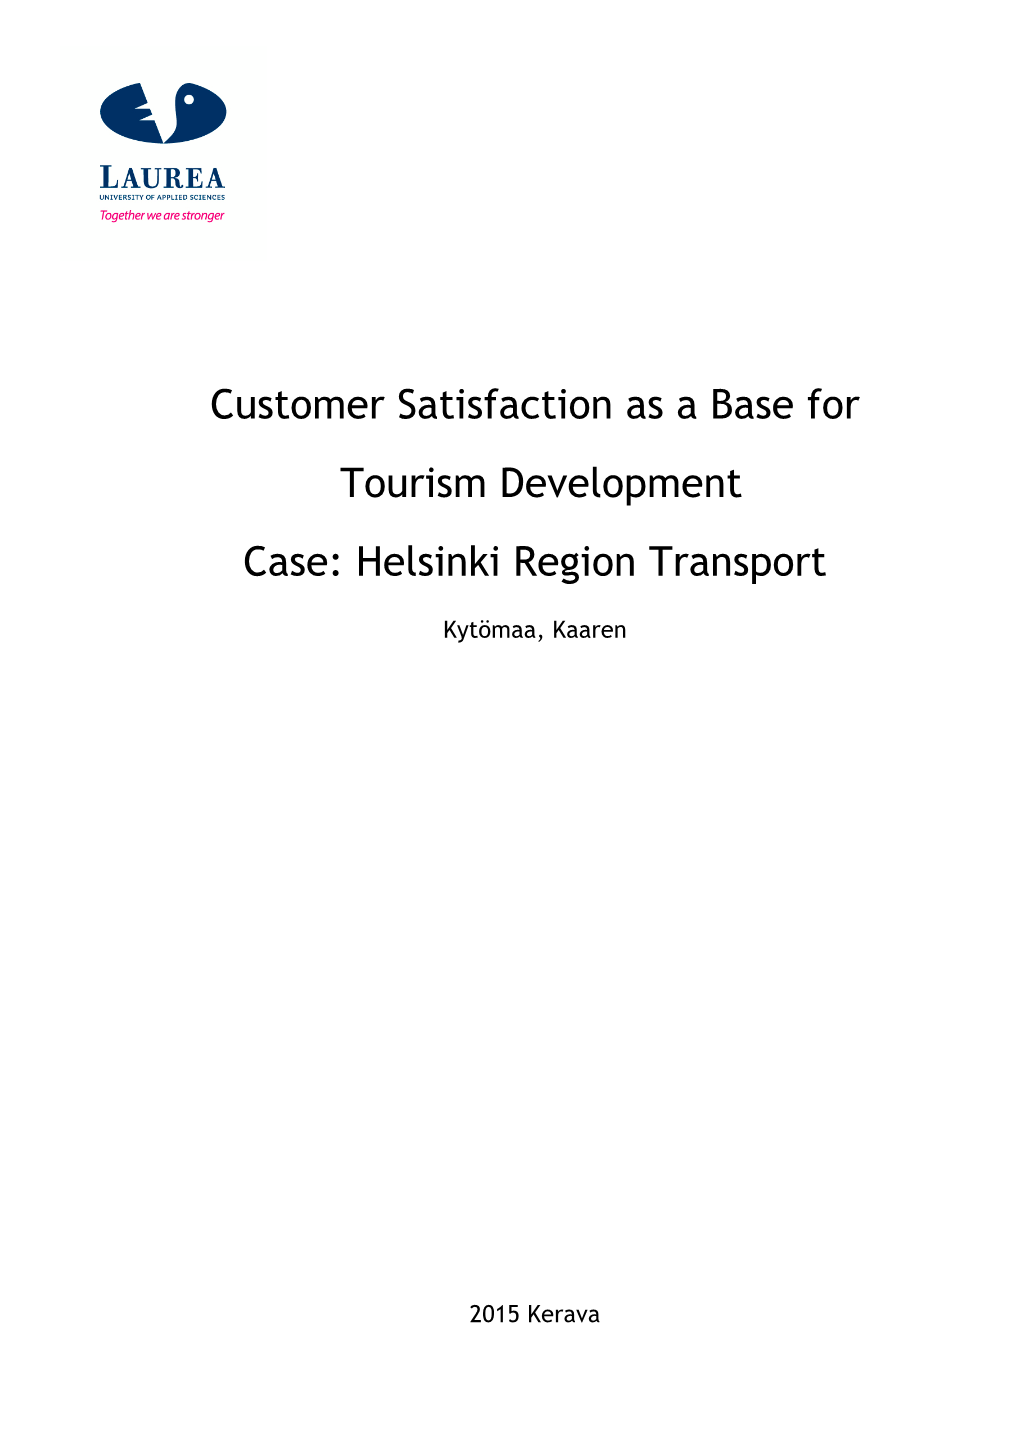 Customer Satisfaction As a Base for Tourism Development Case: Helsinki Region Transport